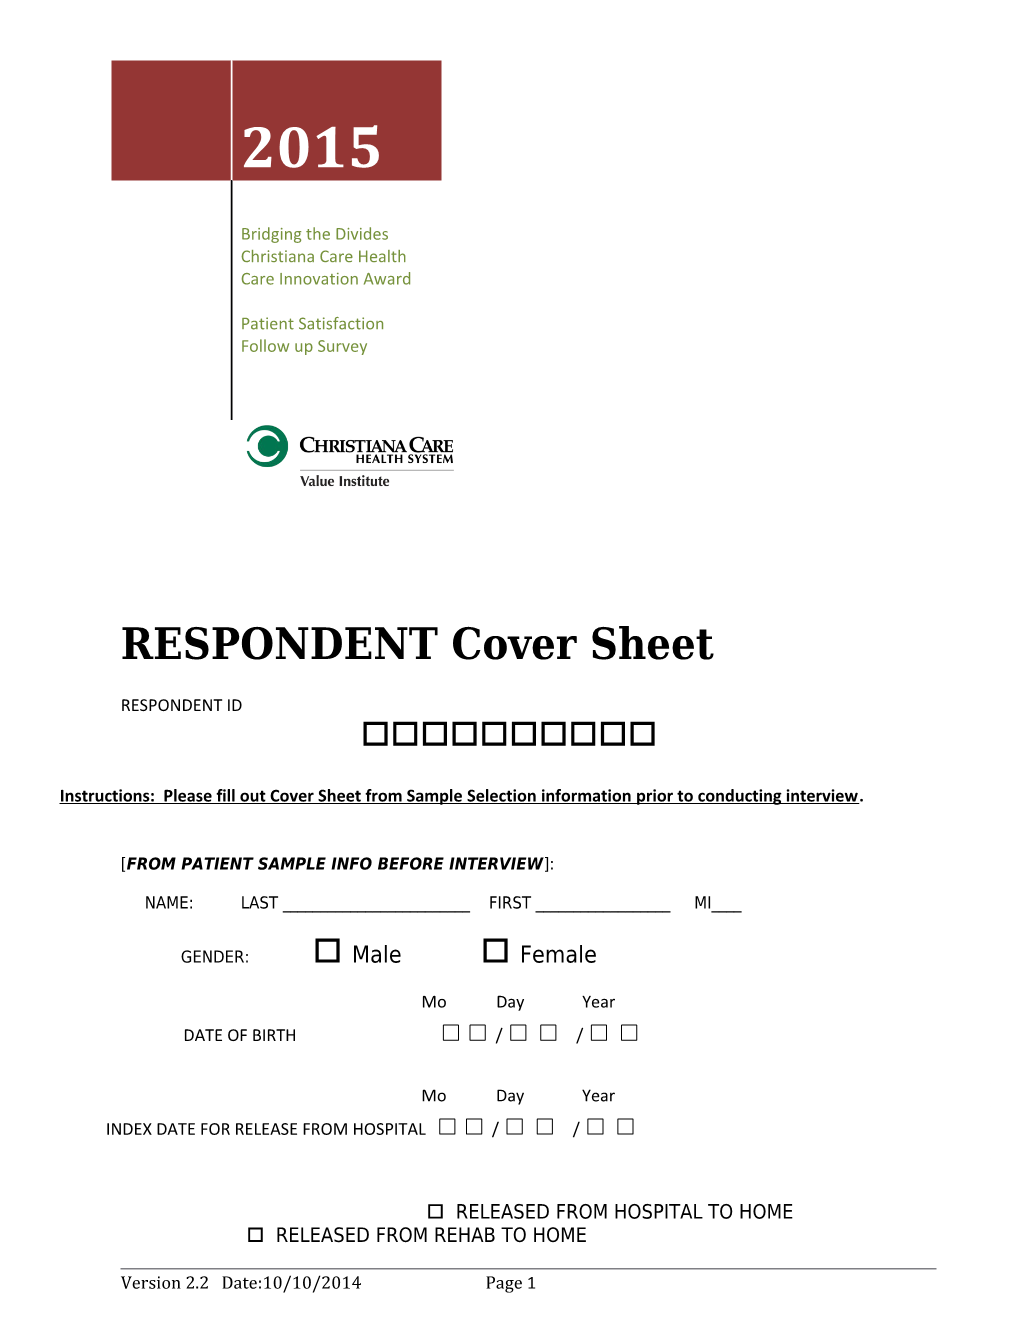 RESPONDENT Cover Sheet